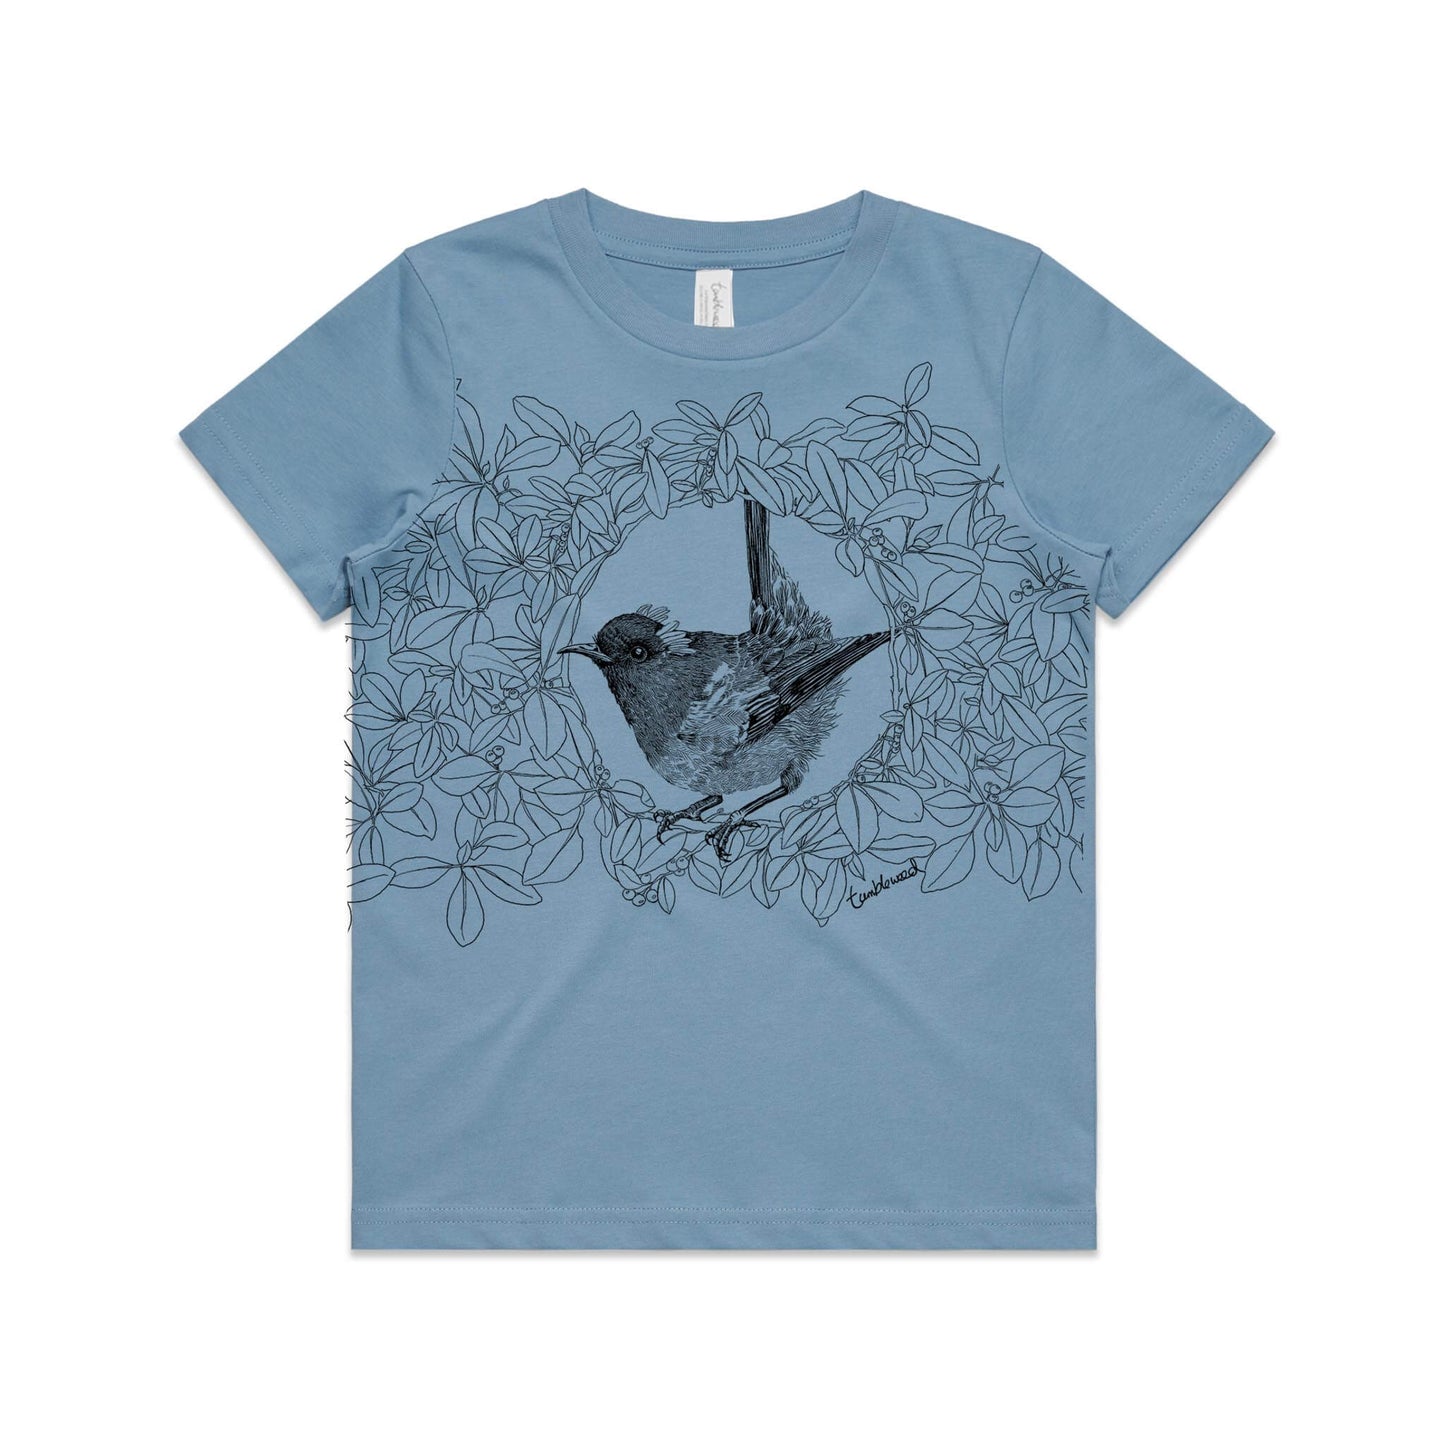 Hihi/Stitchbird Kids' T-shirt